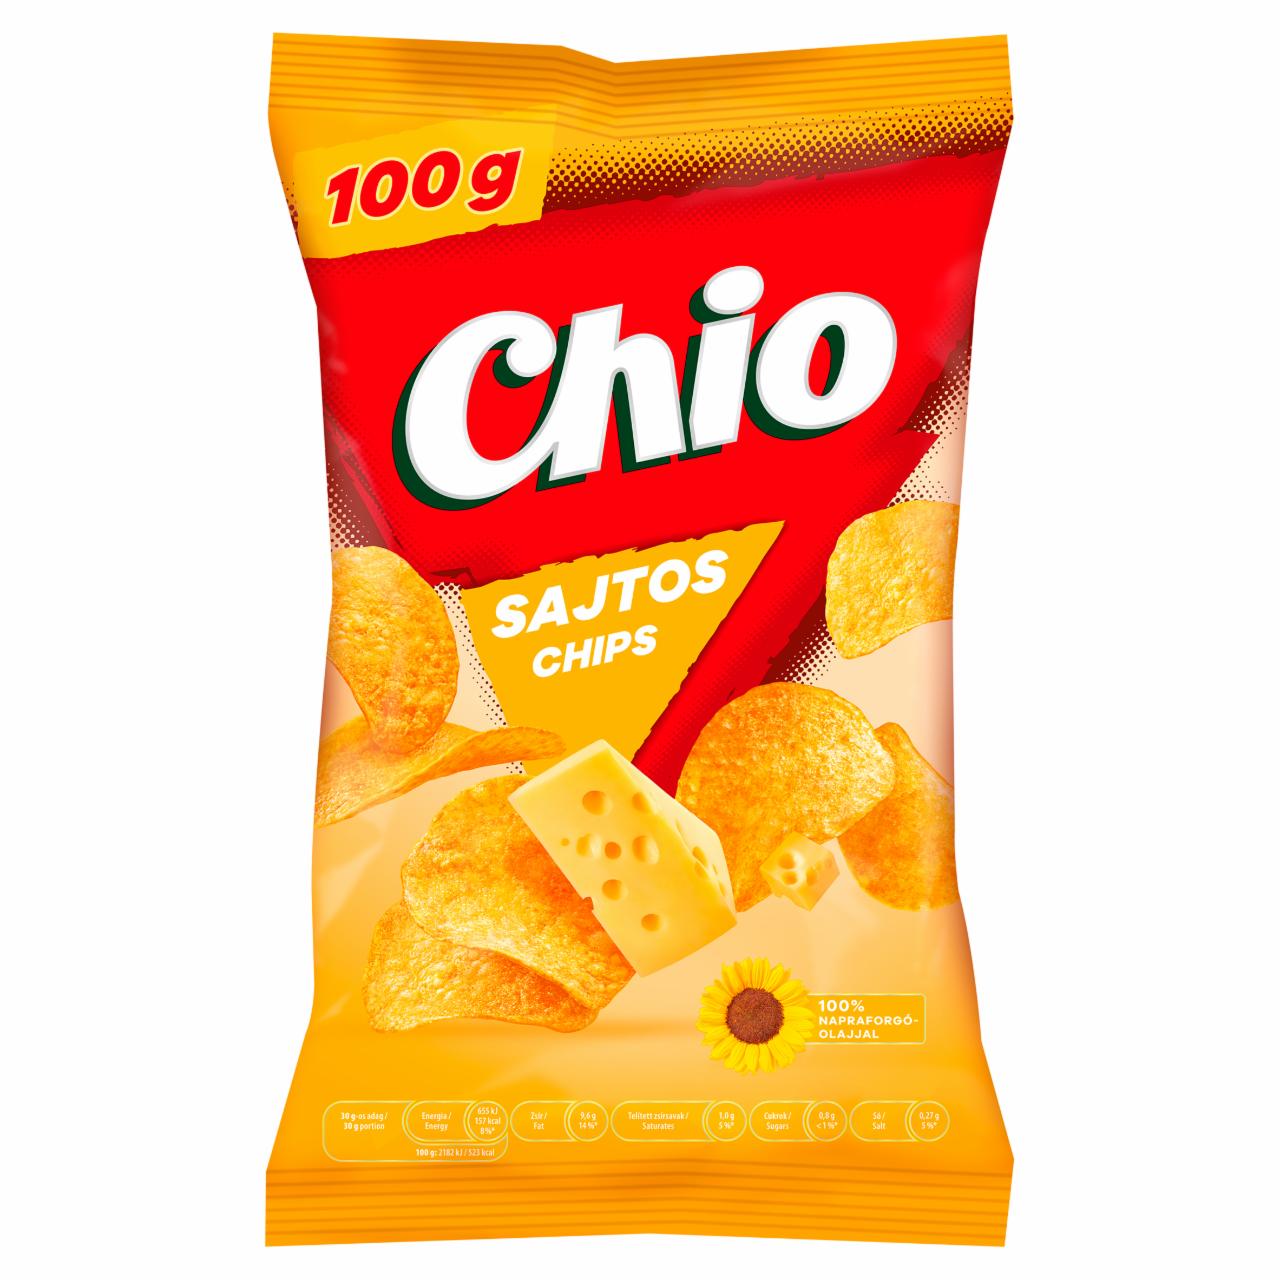 Képek - Chio sajtos chips 100 g